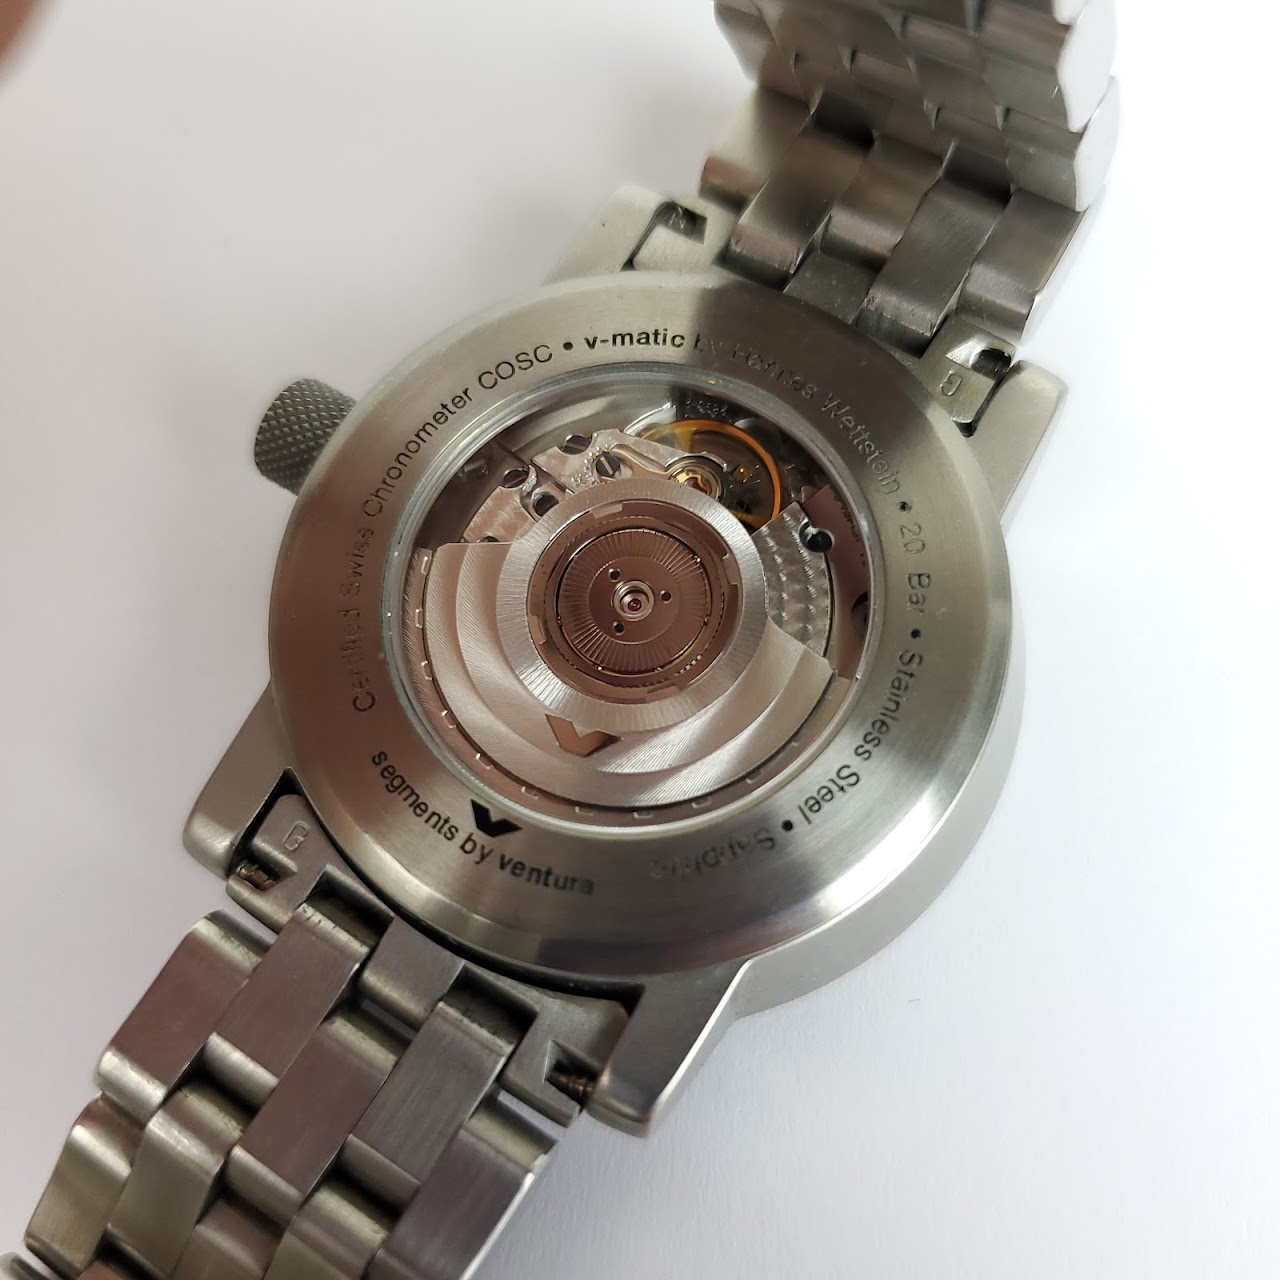 Hannes Wettstein Ventura V-Matic Chronometer Wristwatch